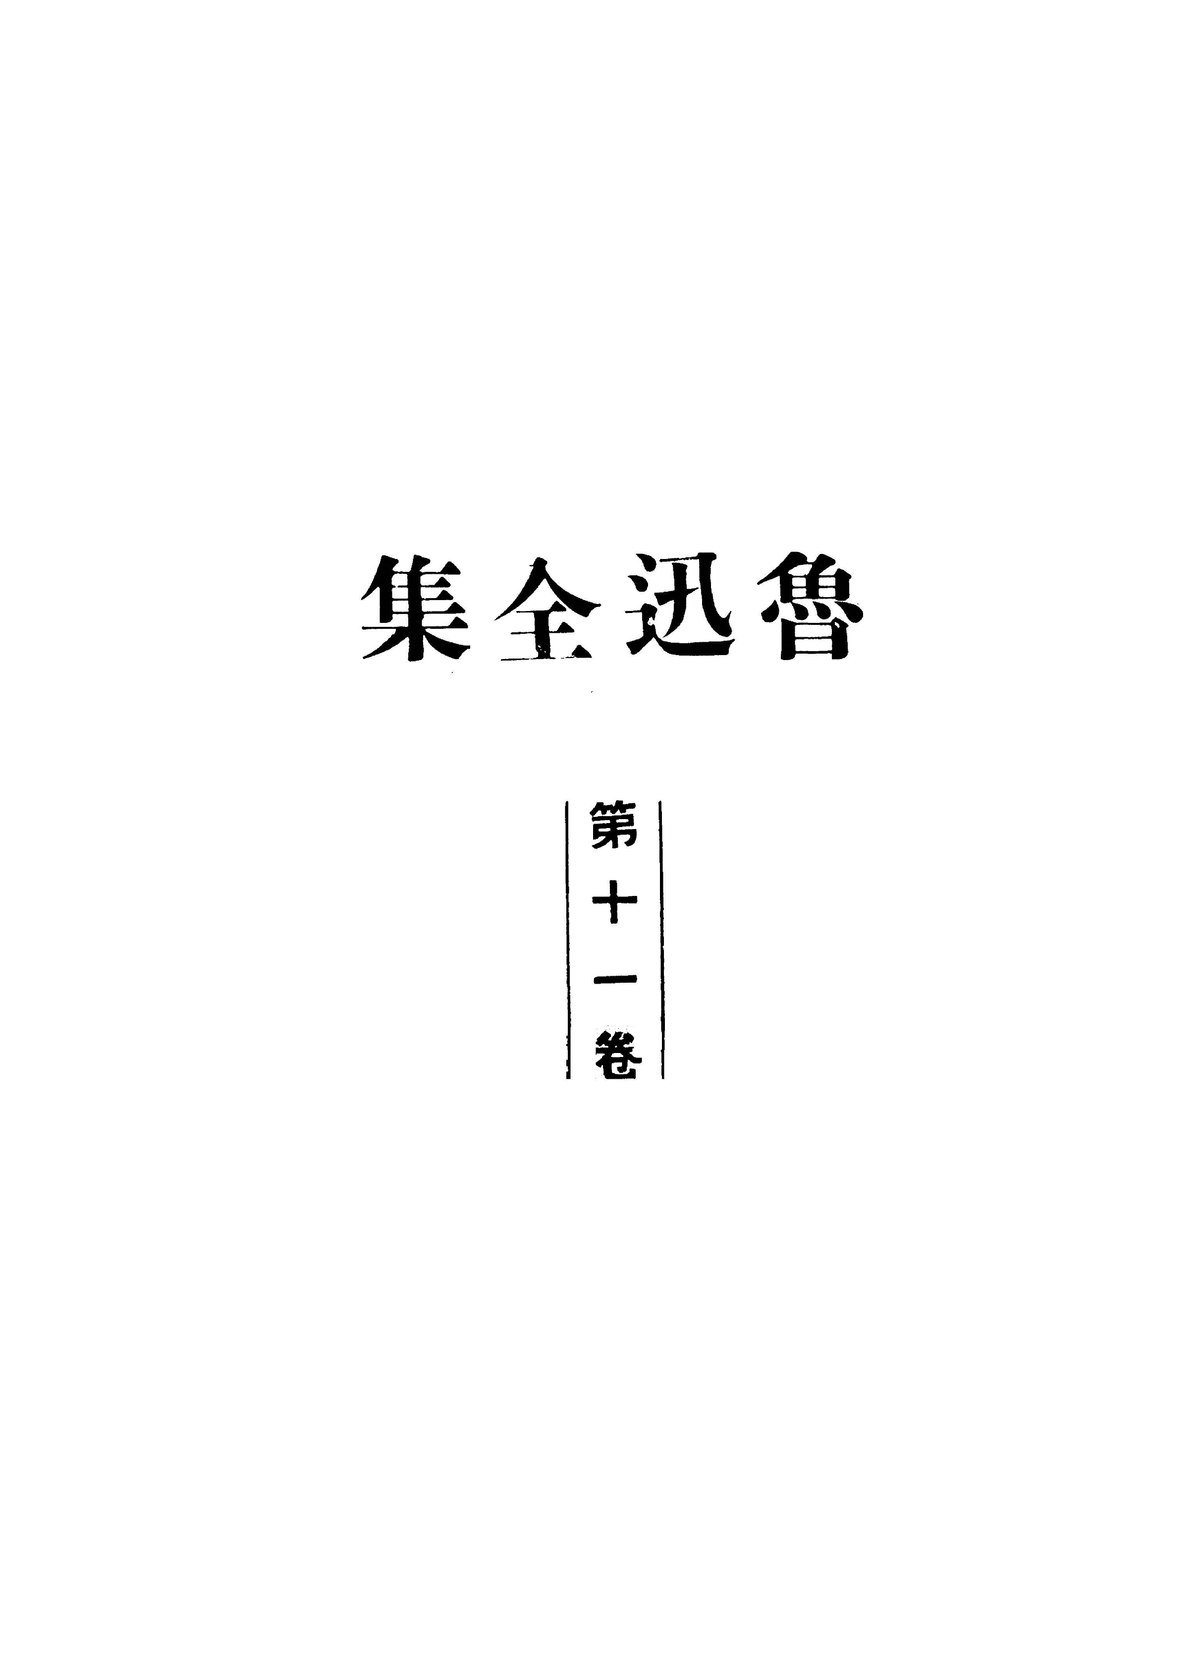 File:魯迅全集11 (1948).pdf - Wikimedia Commons